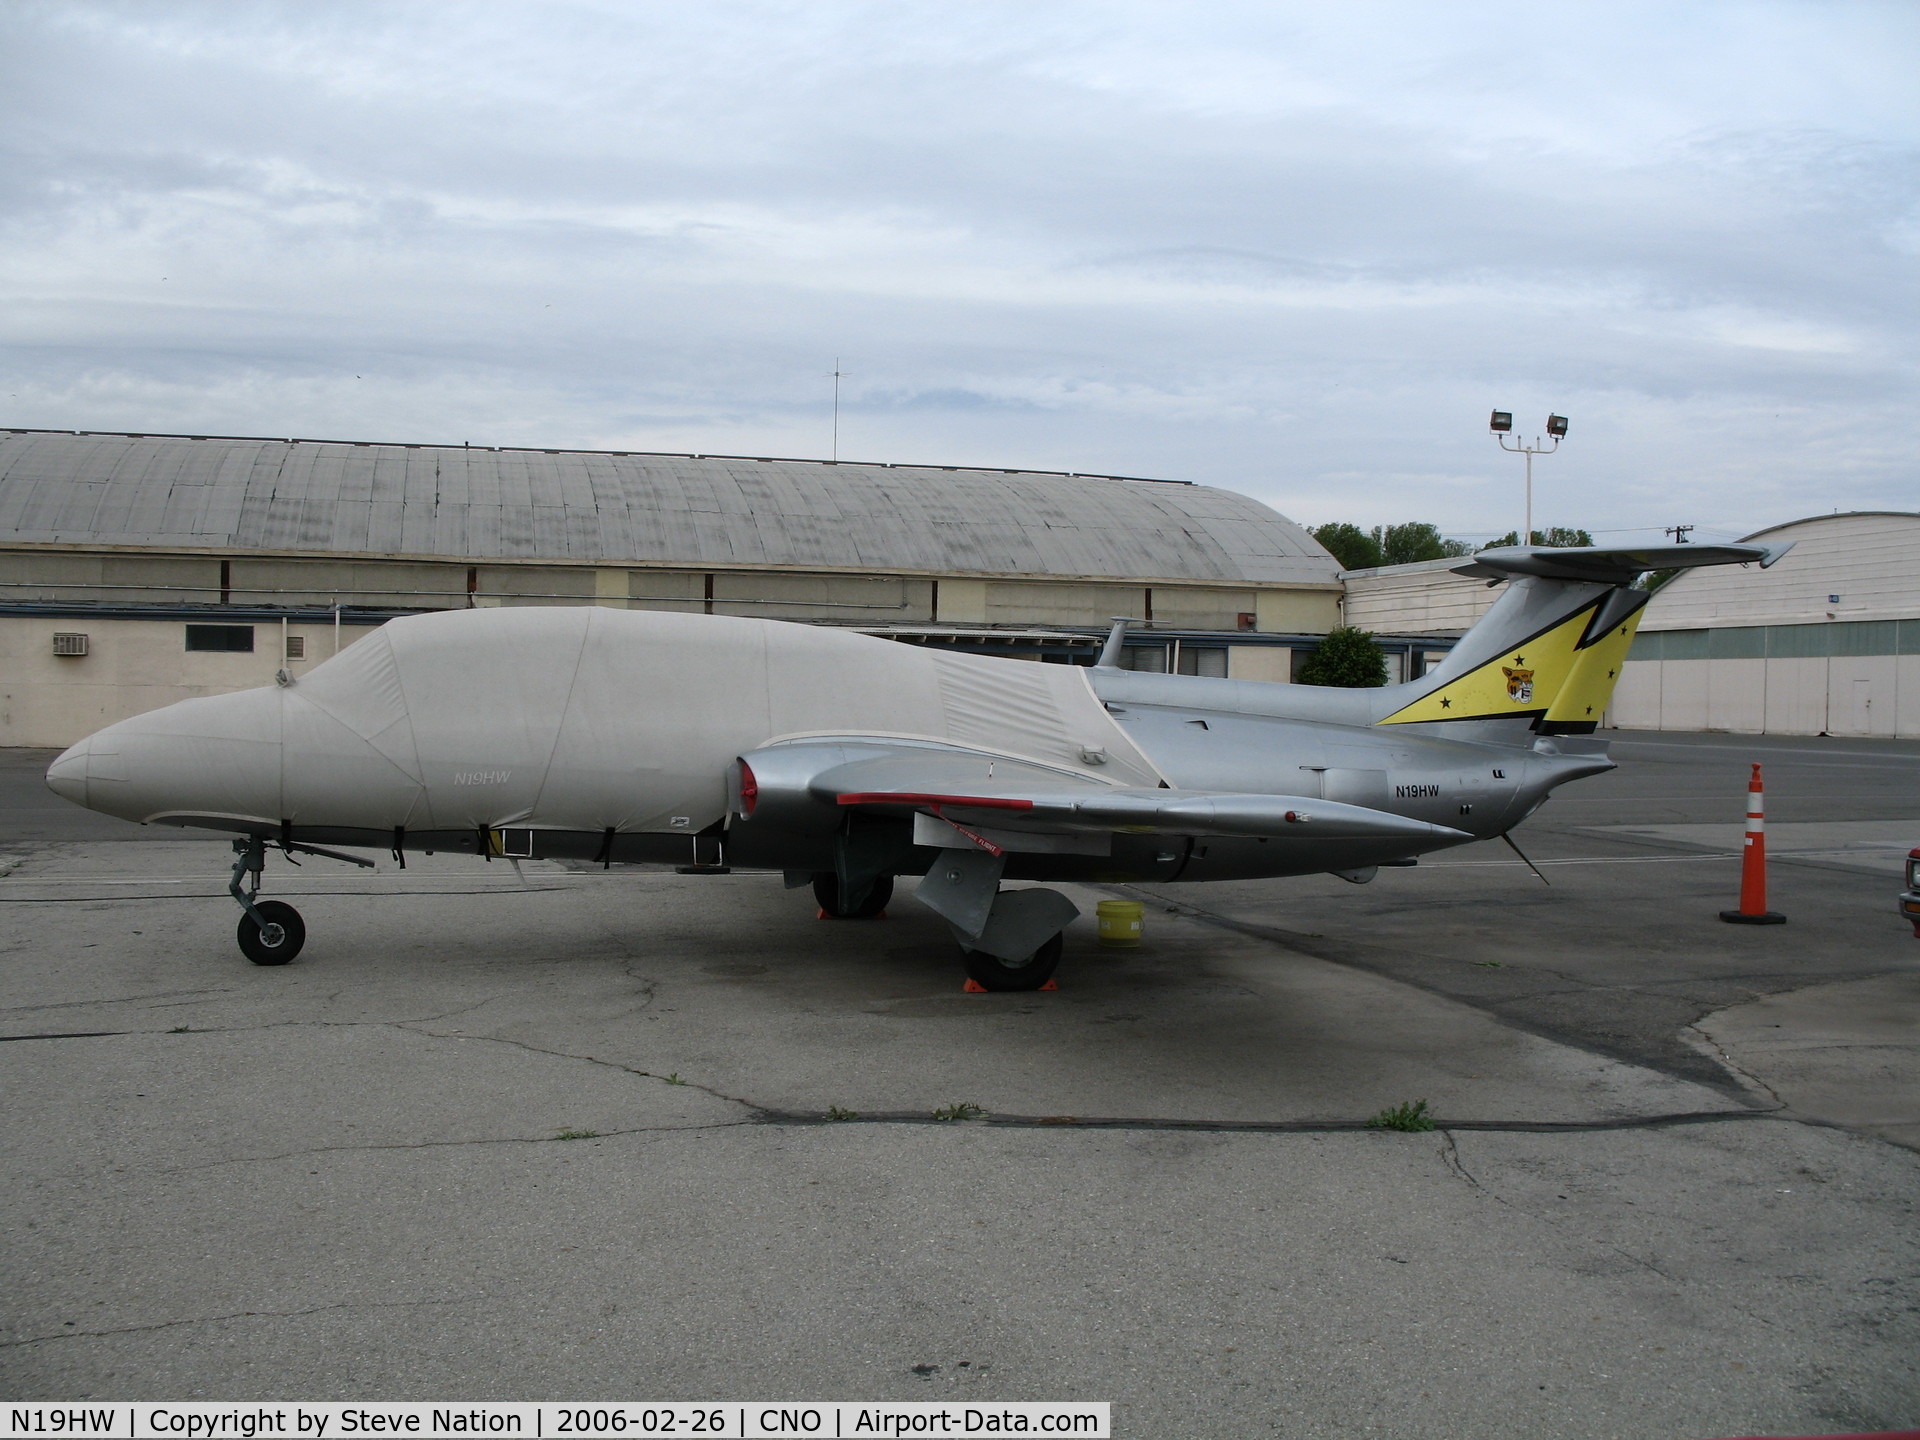 N19HW, 1967 Aero L-29 Delfin C/N 792413, 1971 Aerovodochody L-29 Delfin with USAF 5 FIS markings on tail @ Chino Municipal Airport, CA